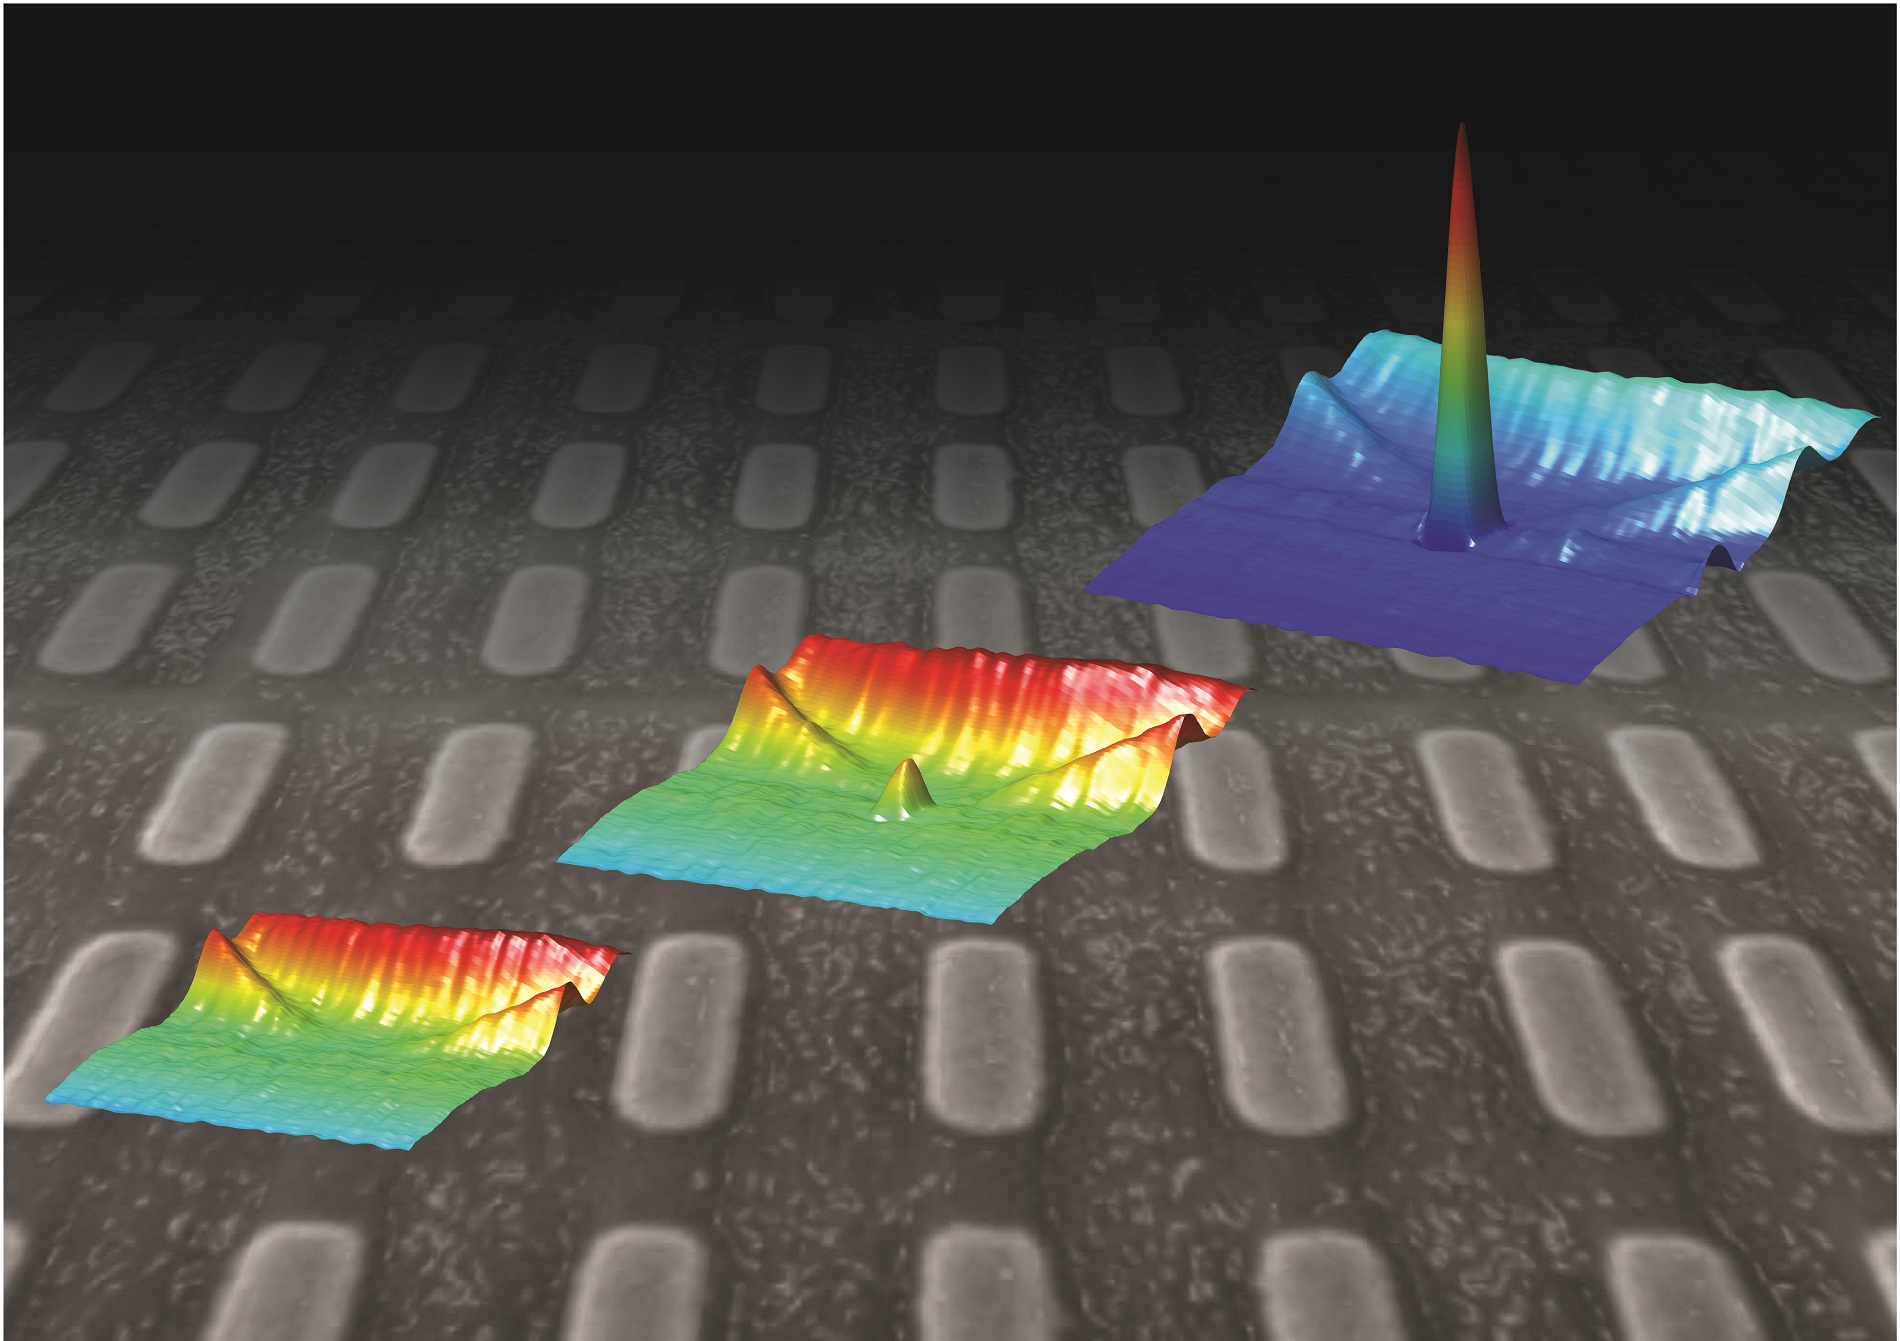 Researchers create nanoscale laser at room temperature